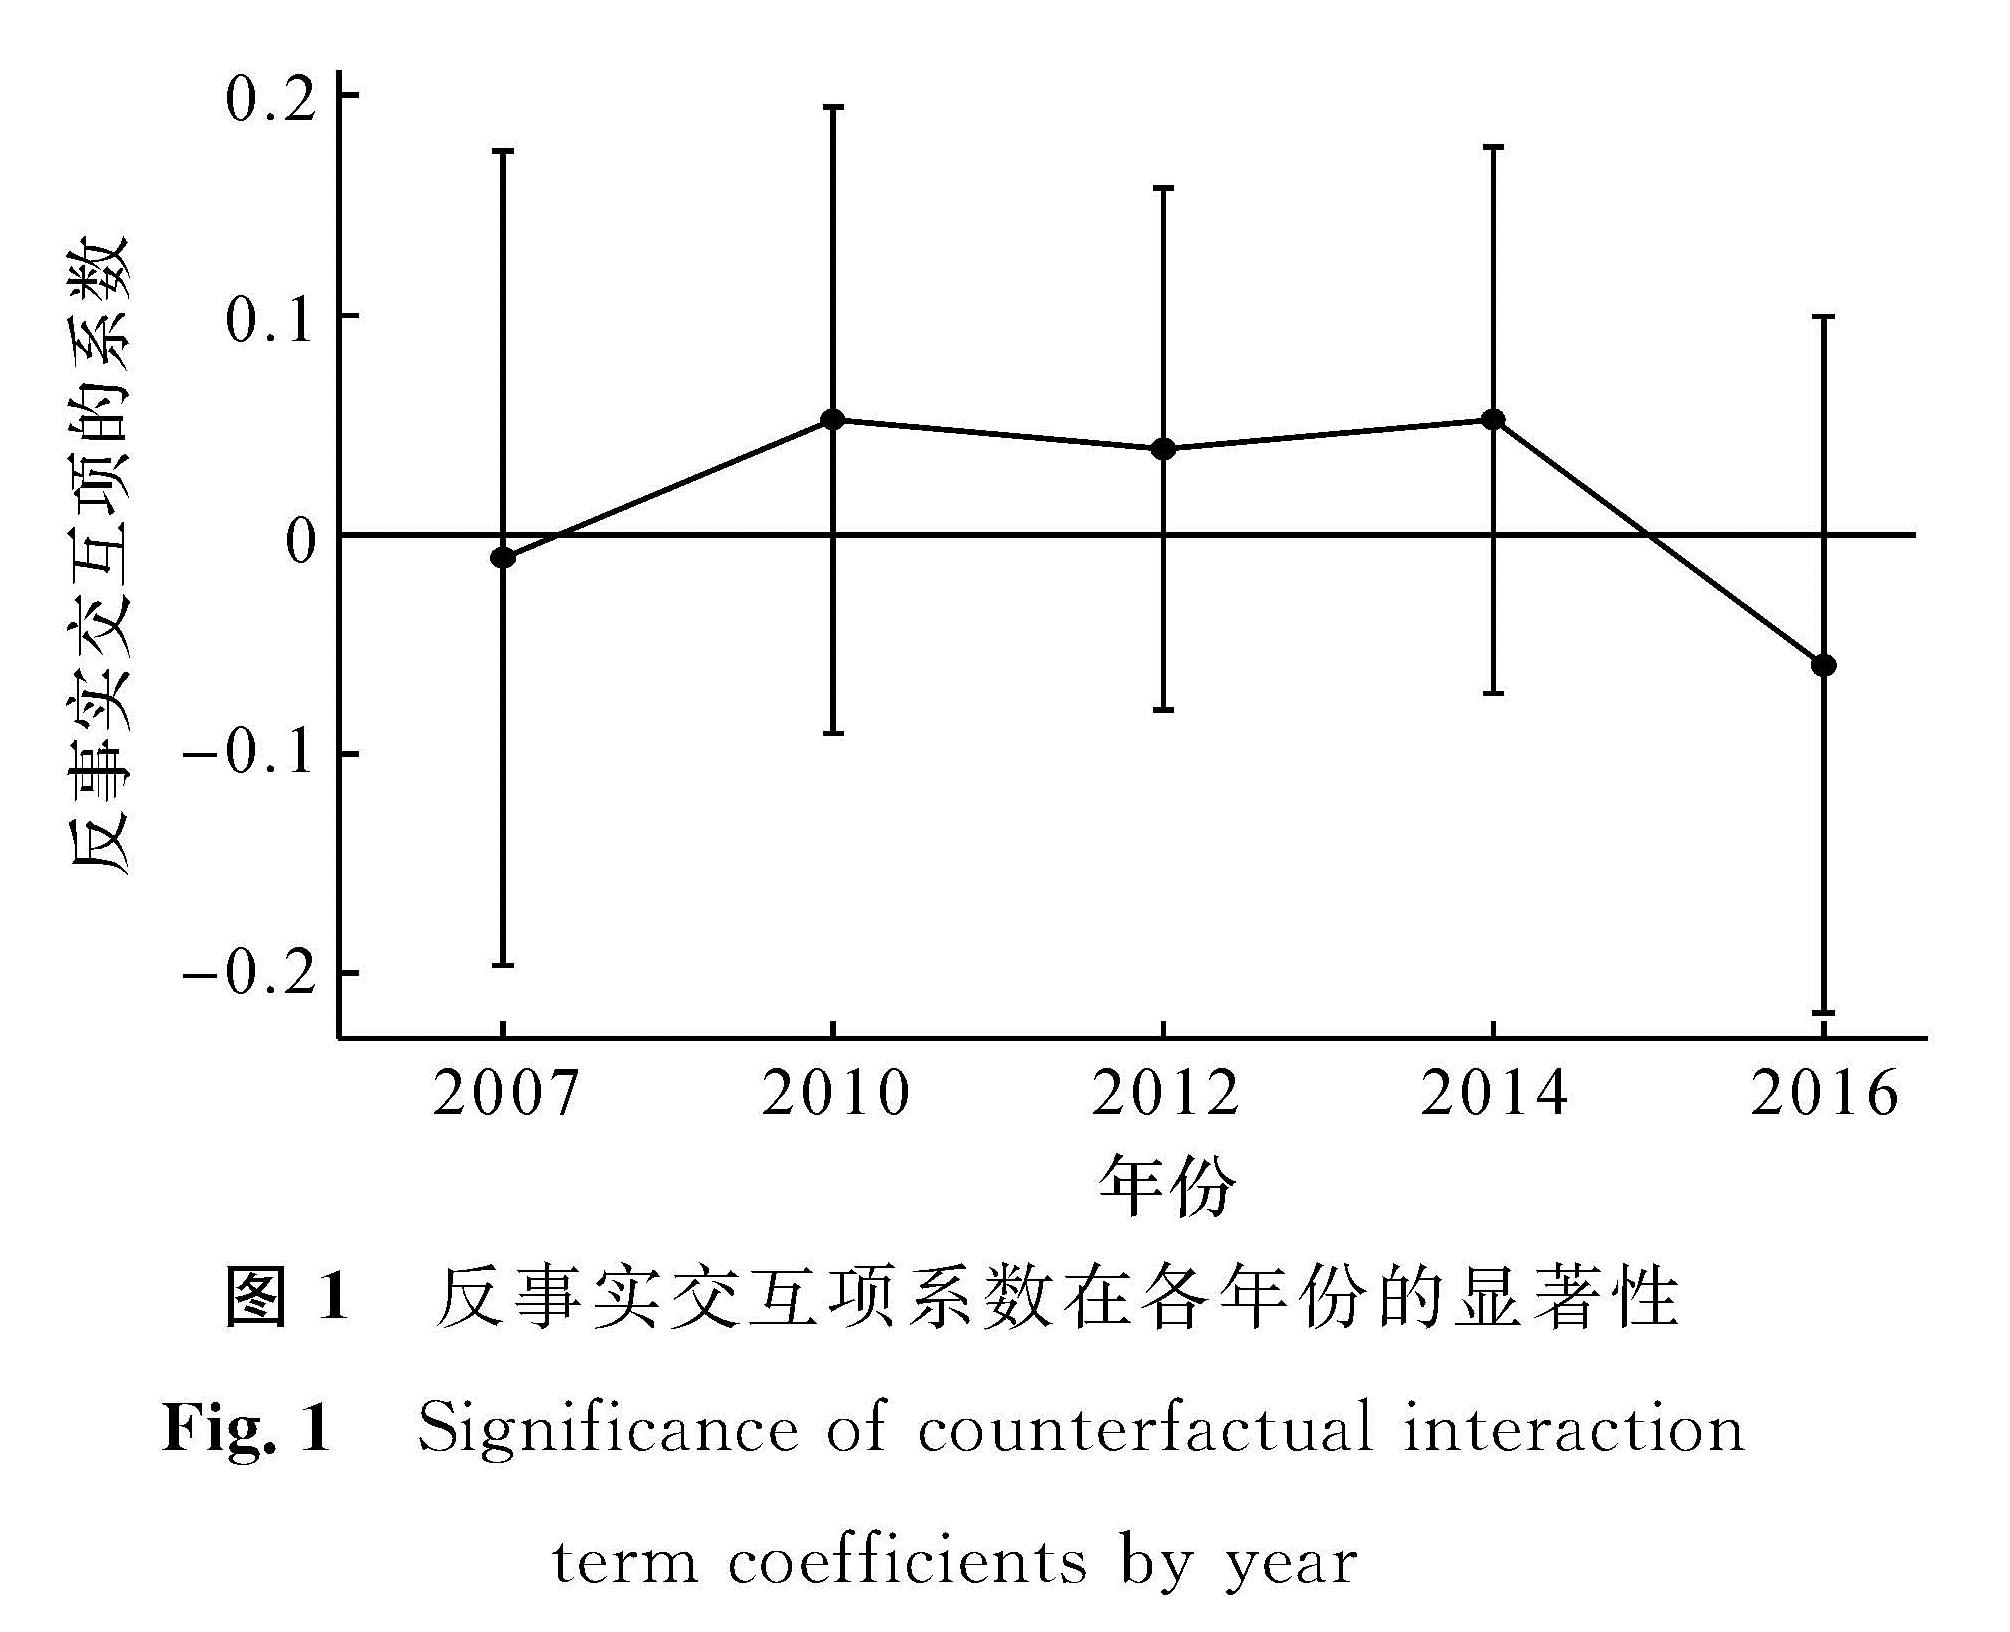 图1 反事实交互项系数在各年份的显著性<br/>Fig.1 Significance of counterfactual interaction term coefficients by year